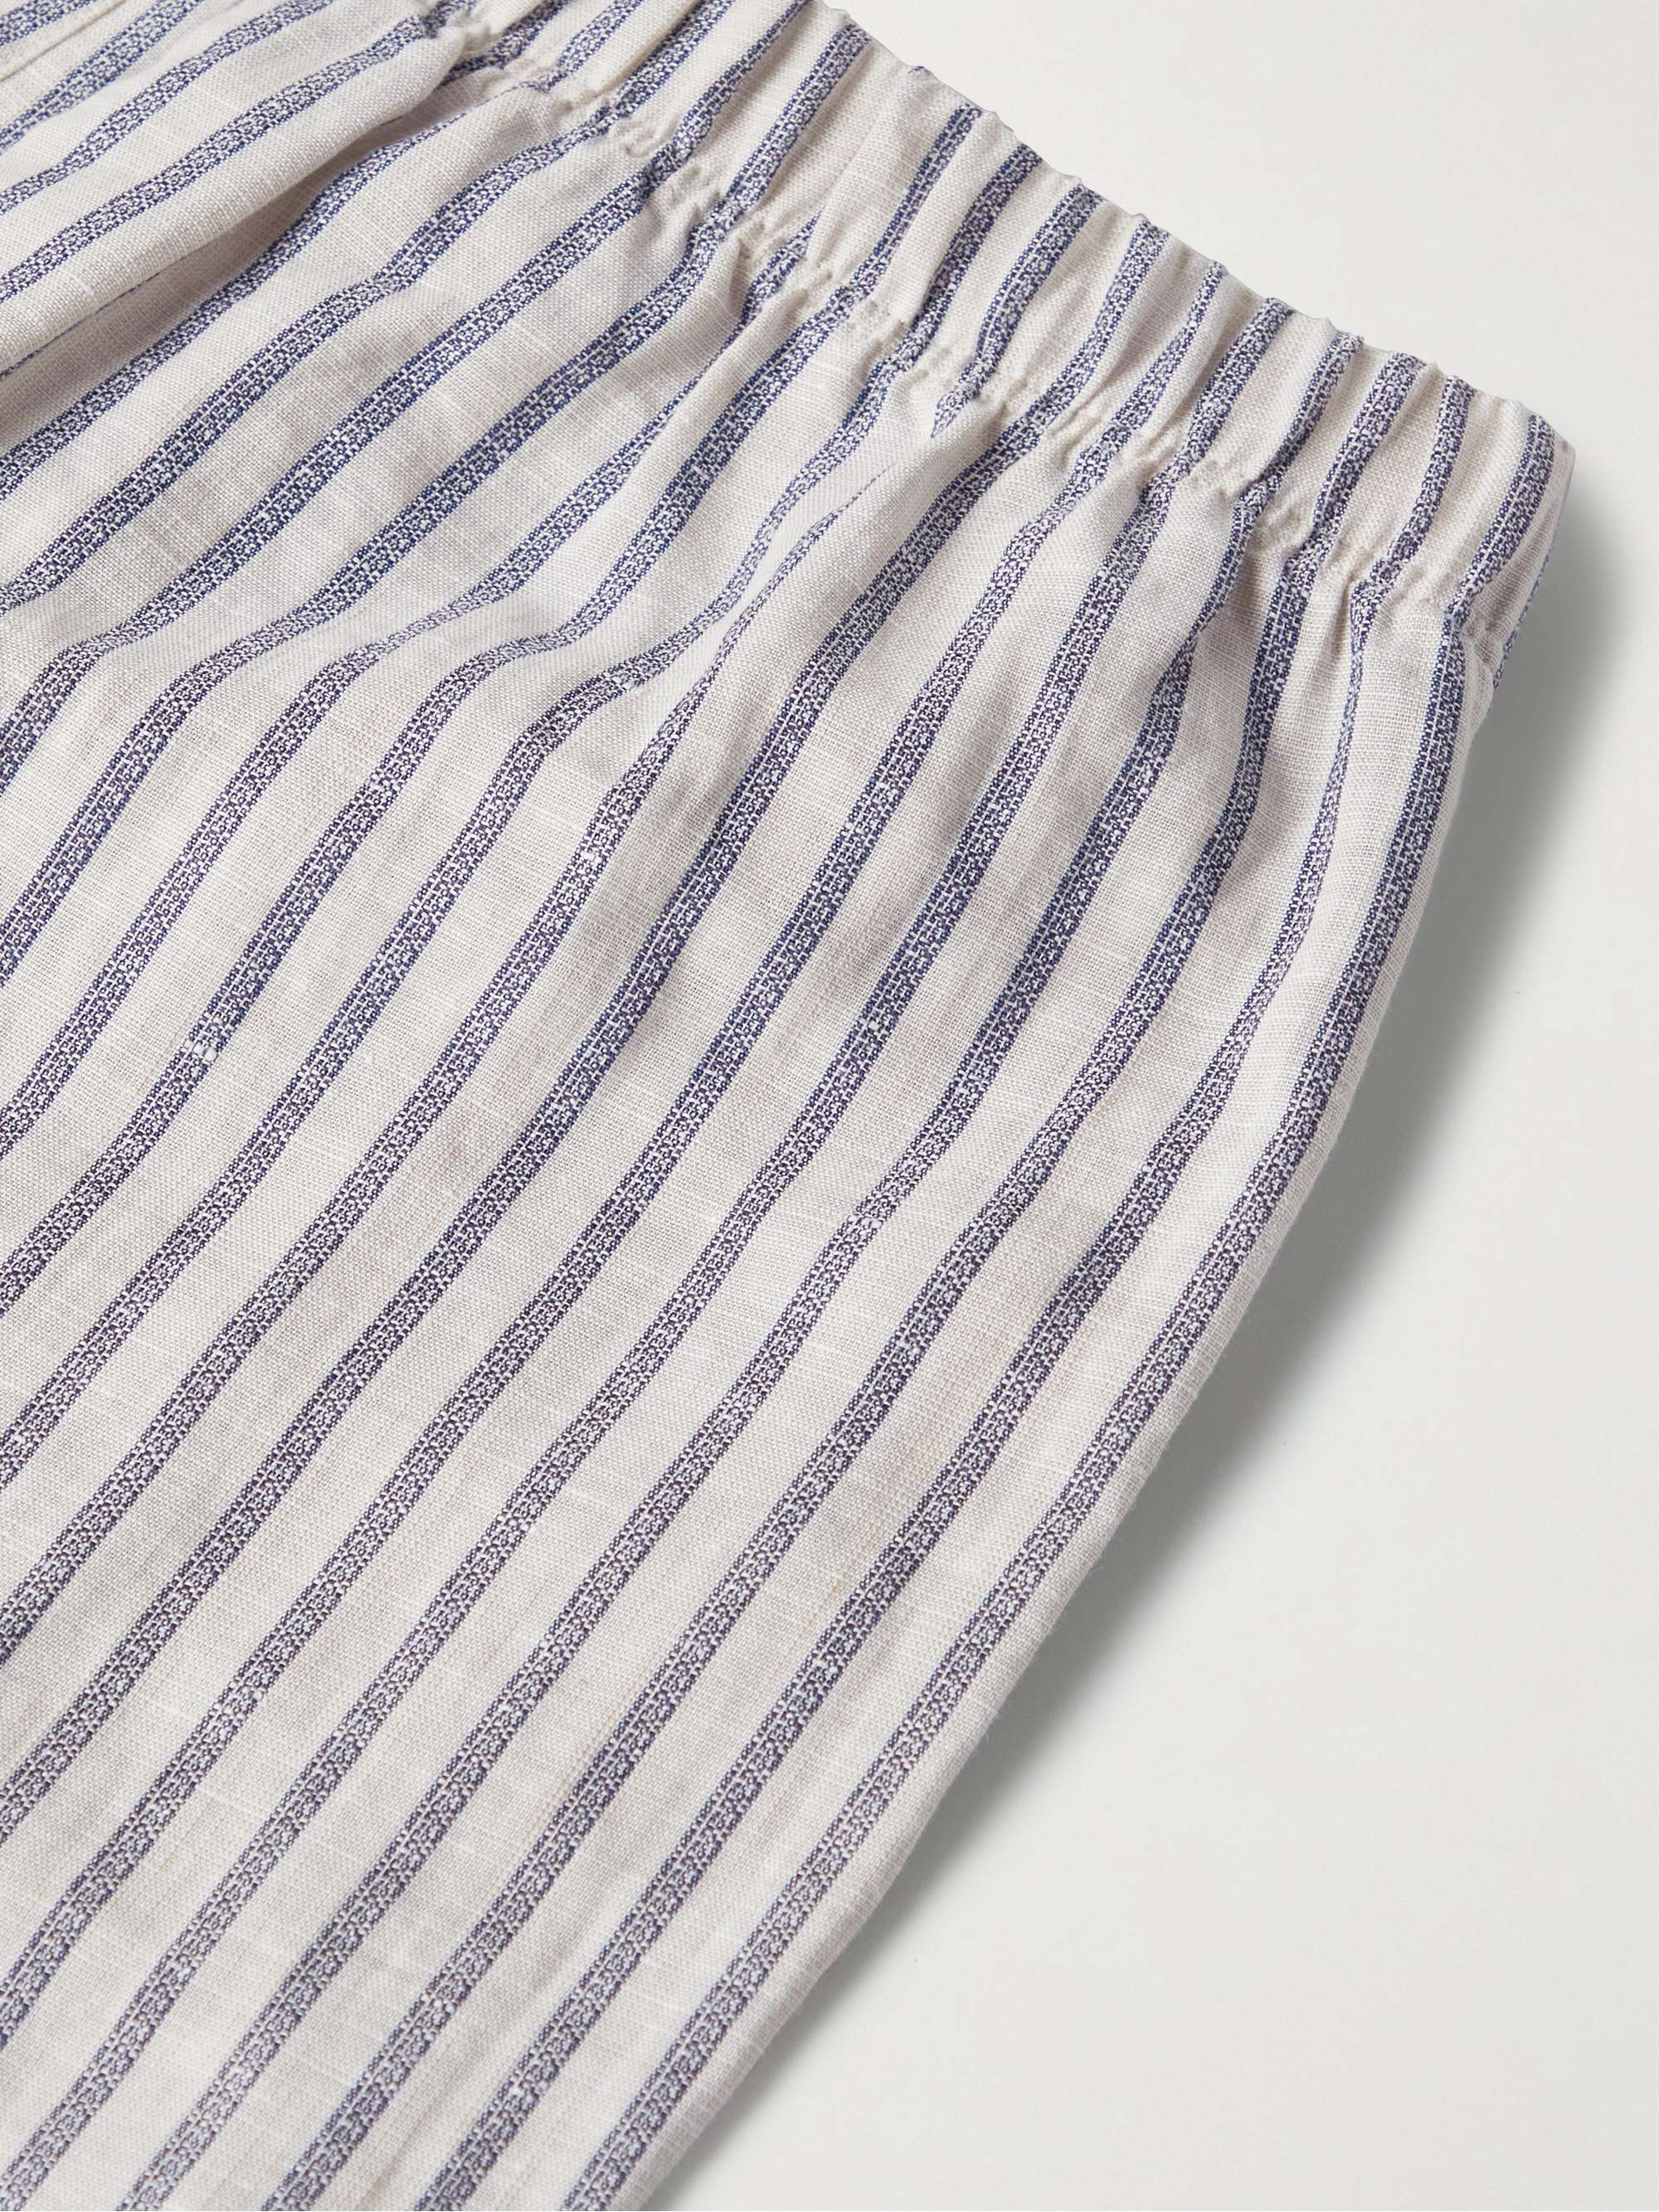 HANRO Anteo Striped Linen and Cotton-Blend Pyjama Trousers